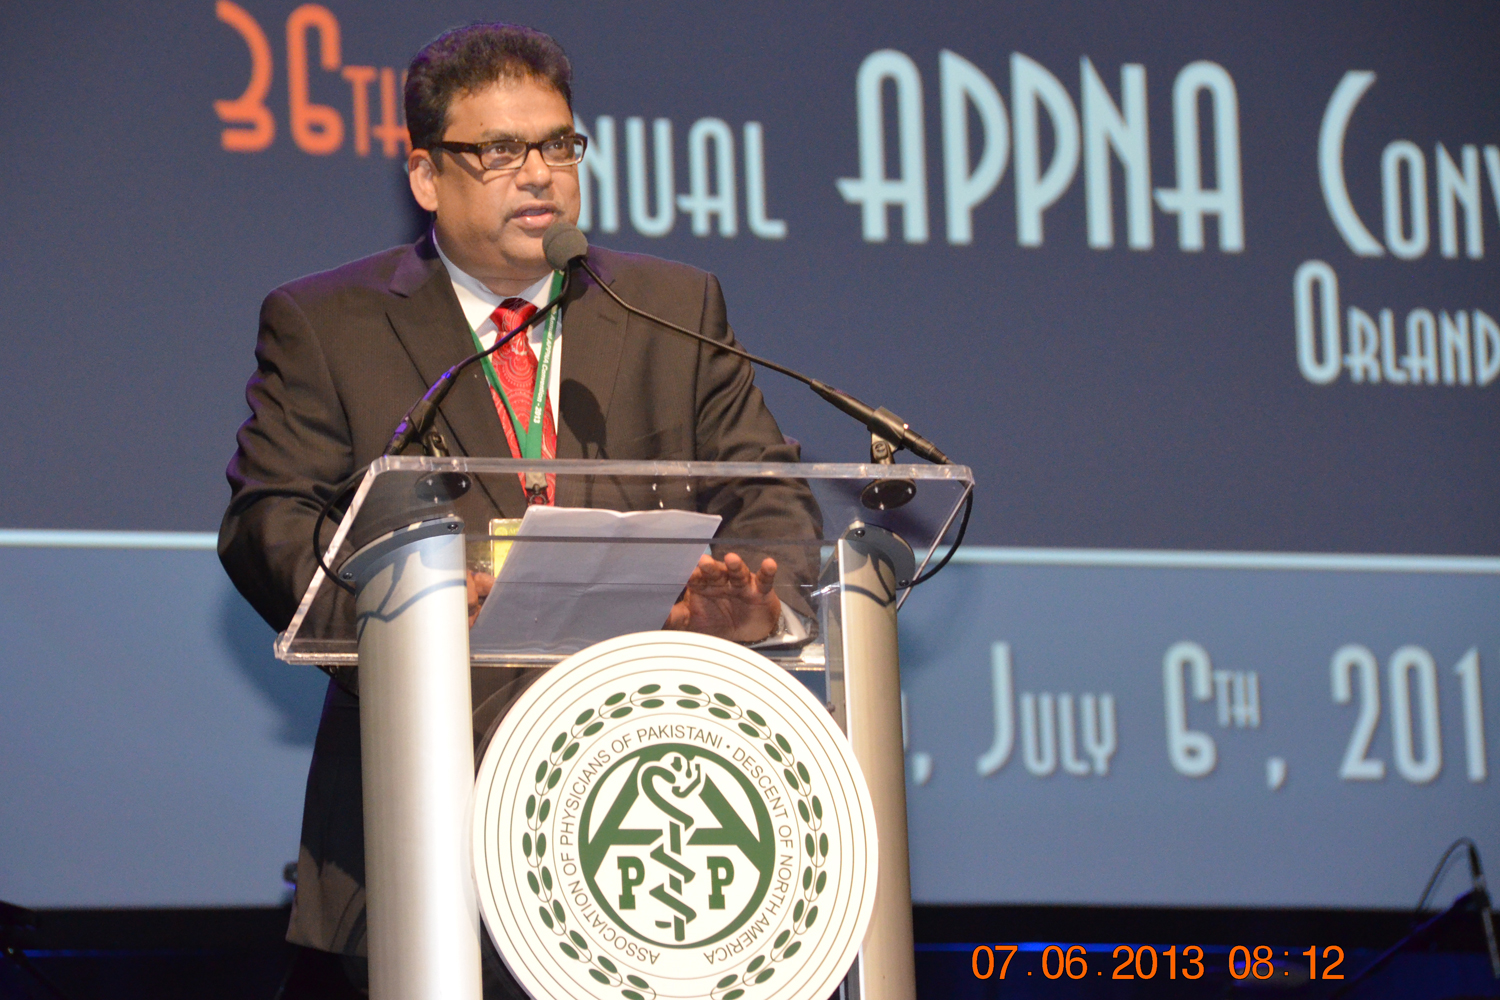 Dr. Javed Suleman, APPNA President 2013